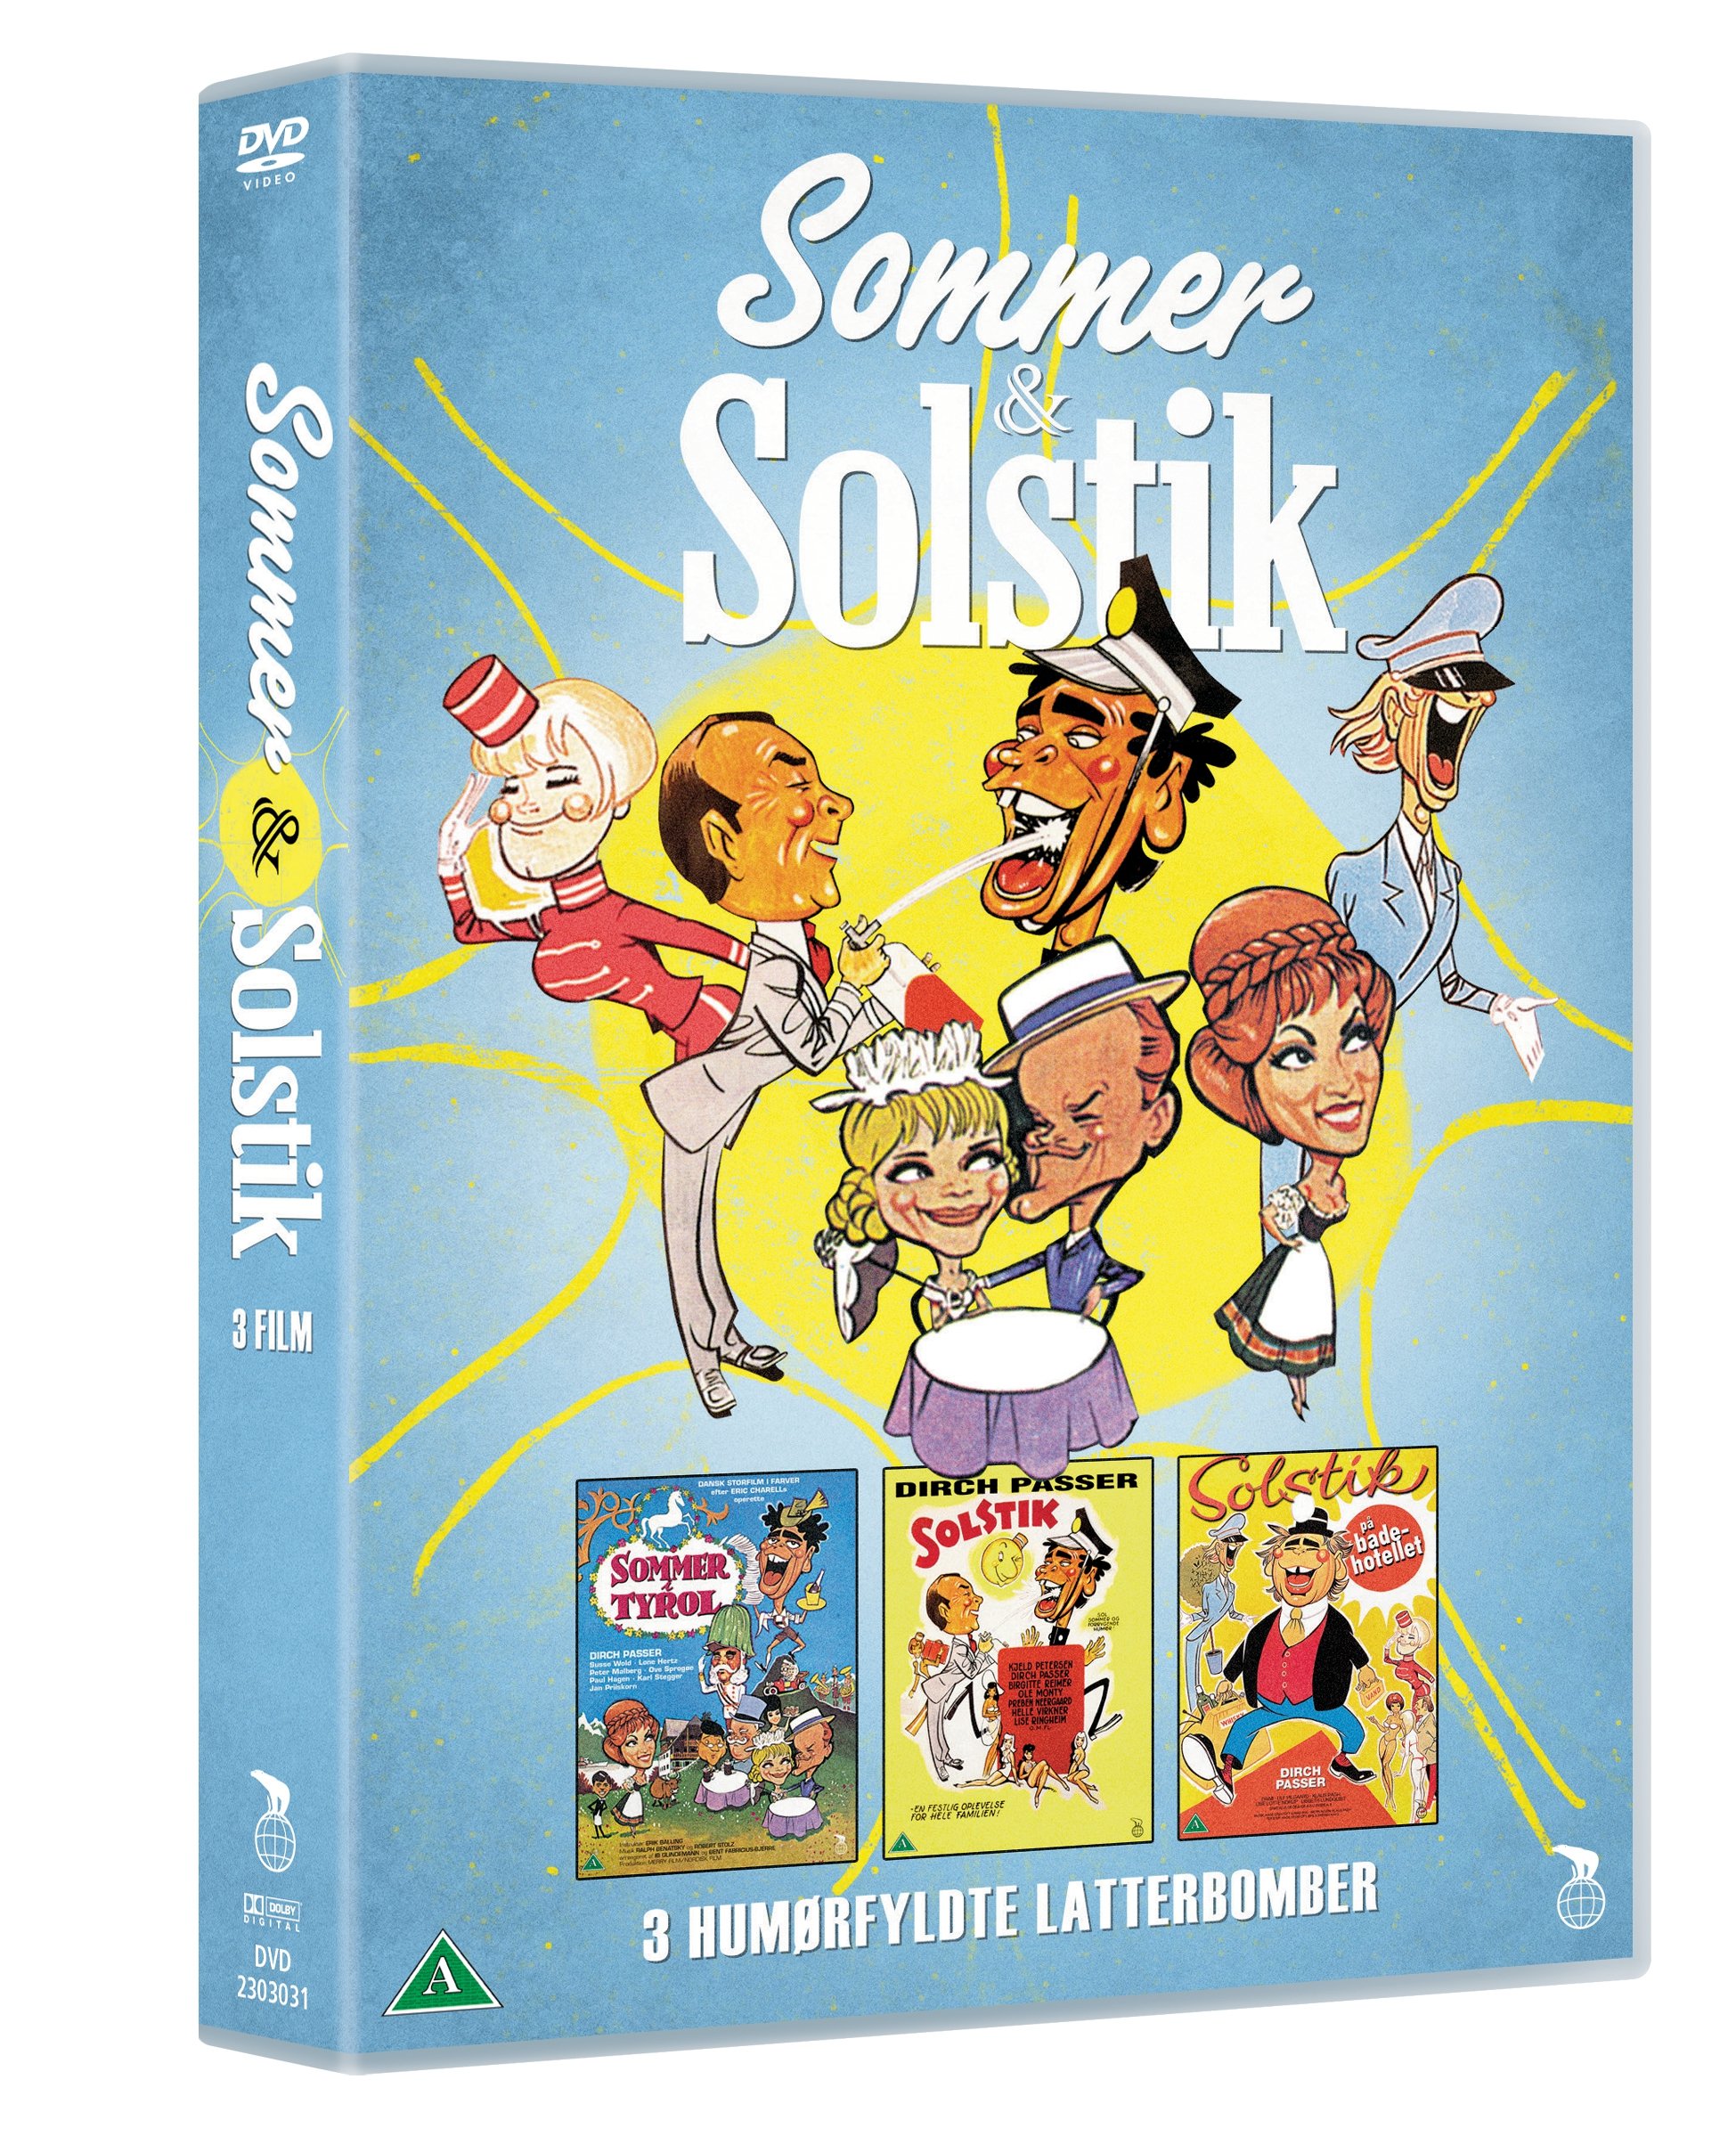 Forbandet lav lektier morfin Køb Sommer Og Solstik - DVD